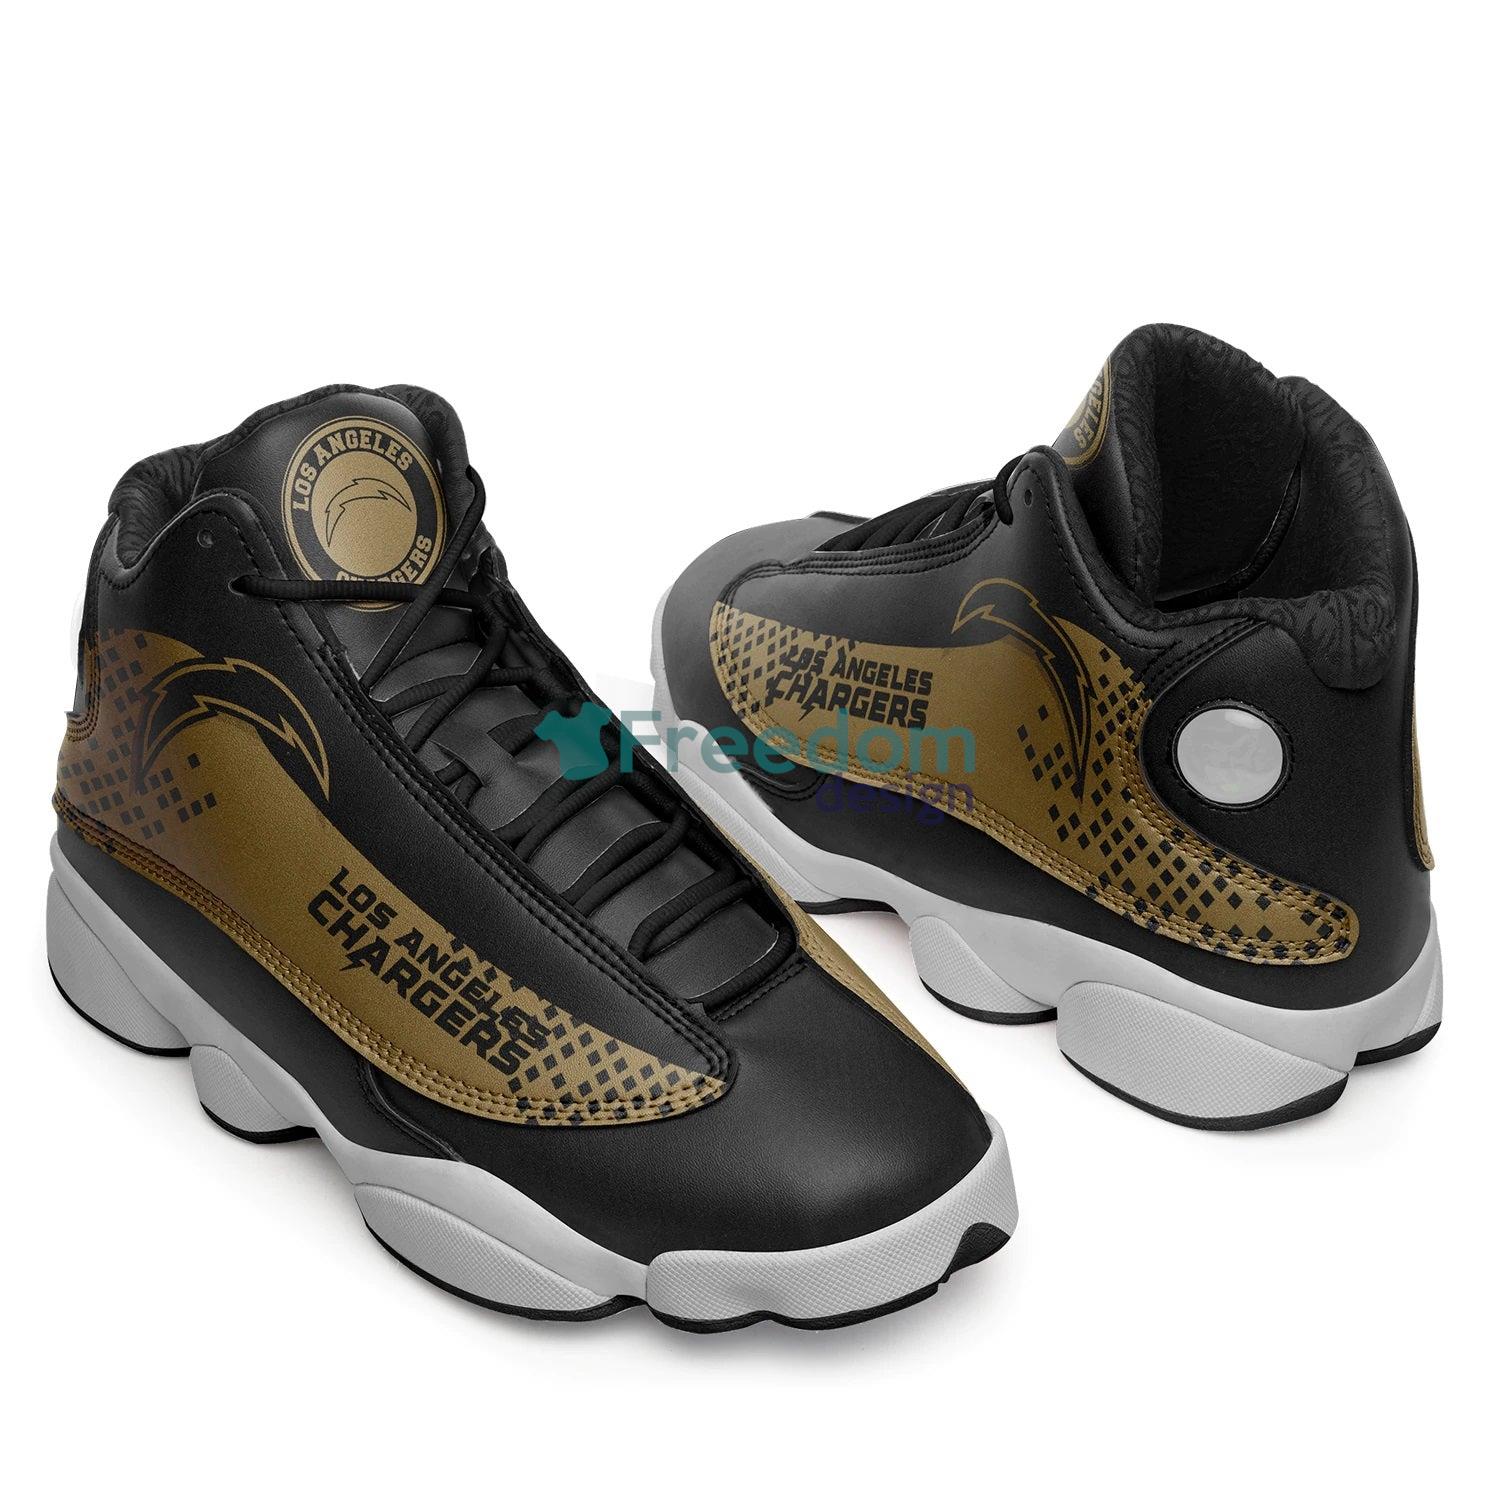 Los Angeles Chargers Team Black Air Jordan 13 Sneaker Shoes For Fans